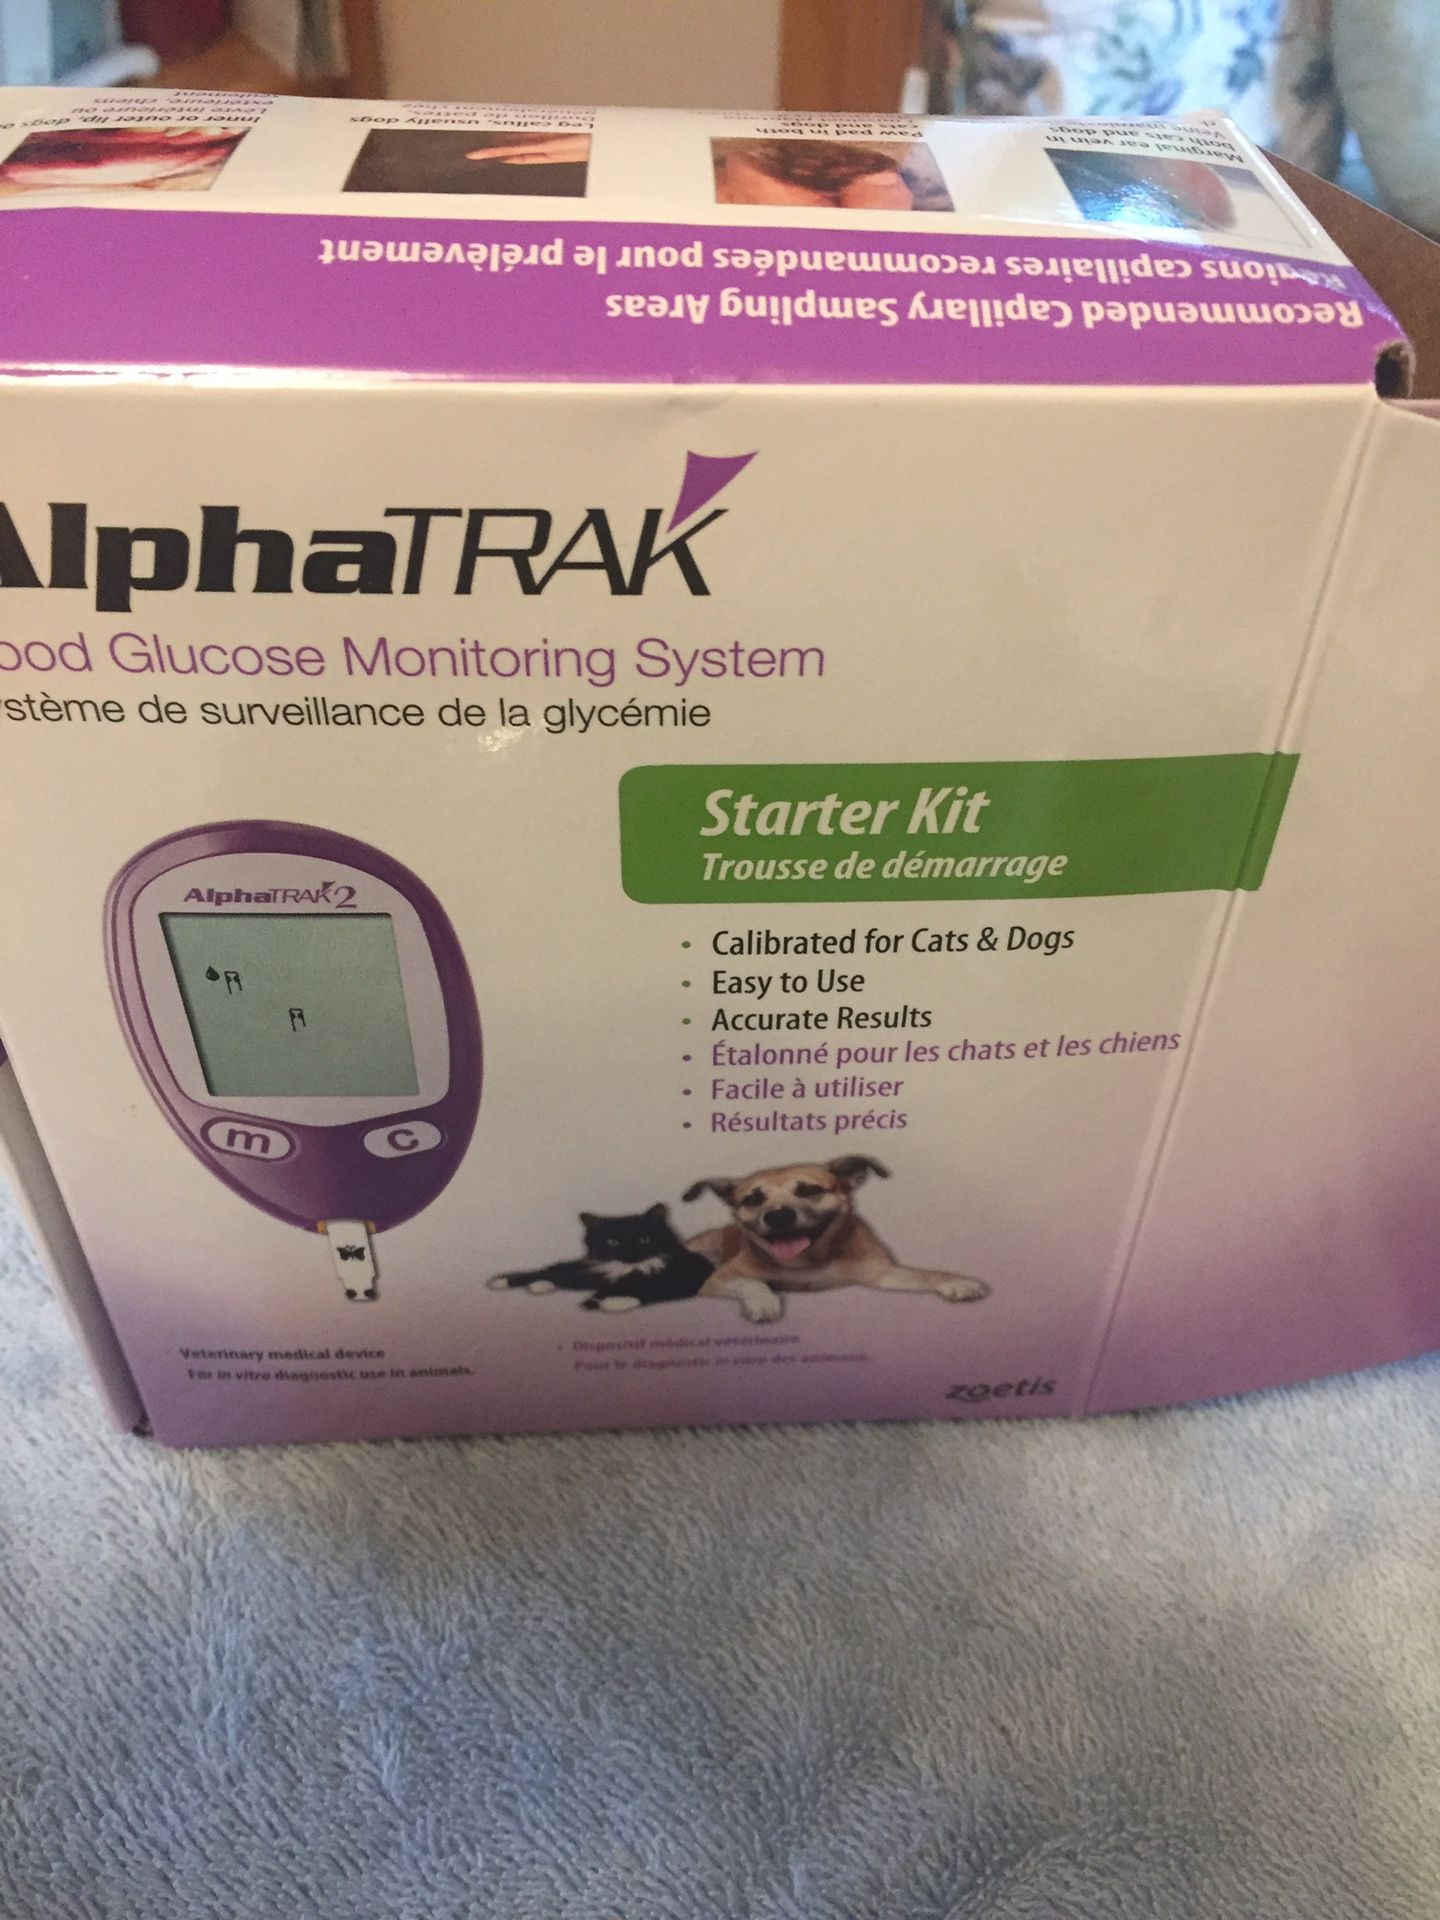 AlphaTrak2 Blood Glucose Monitoring System for pets